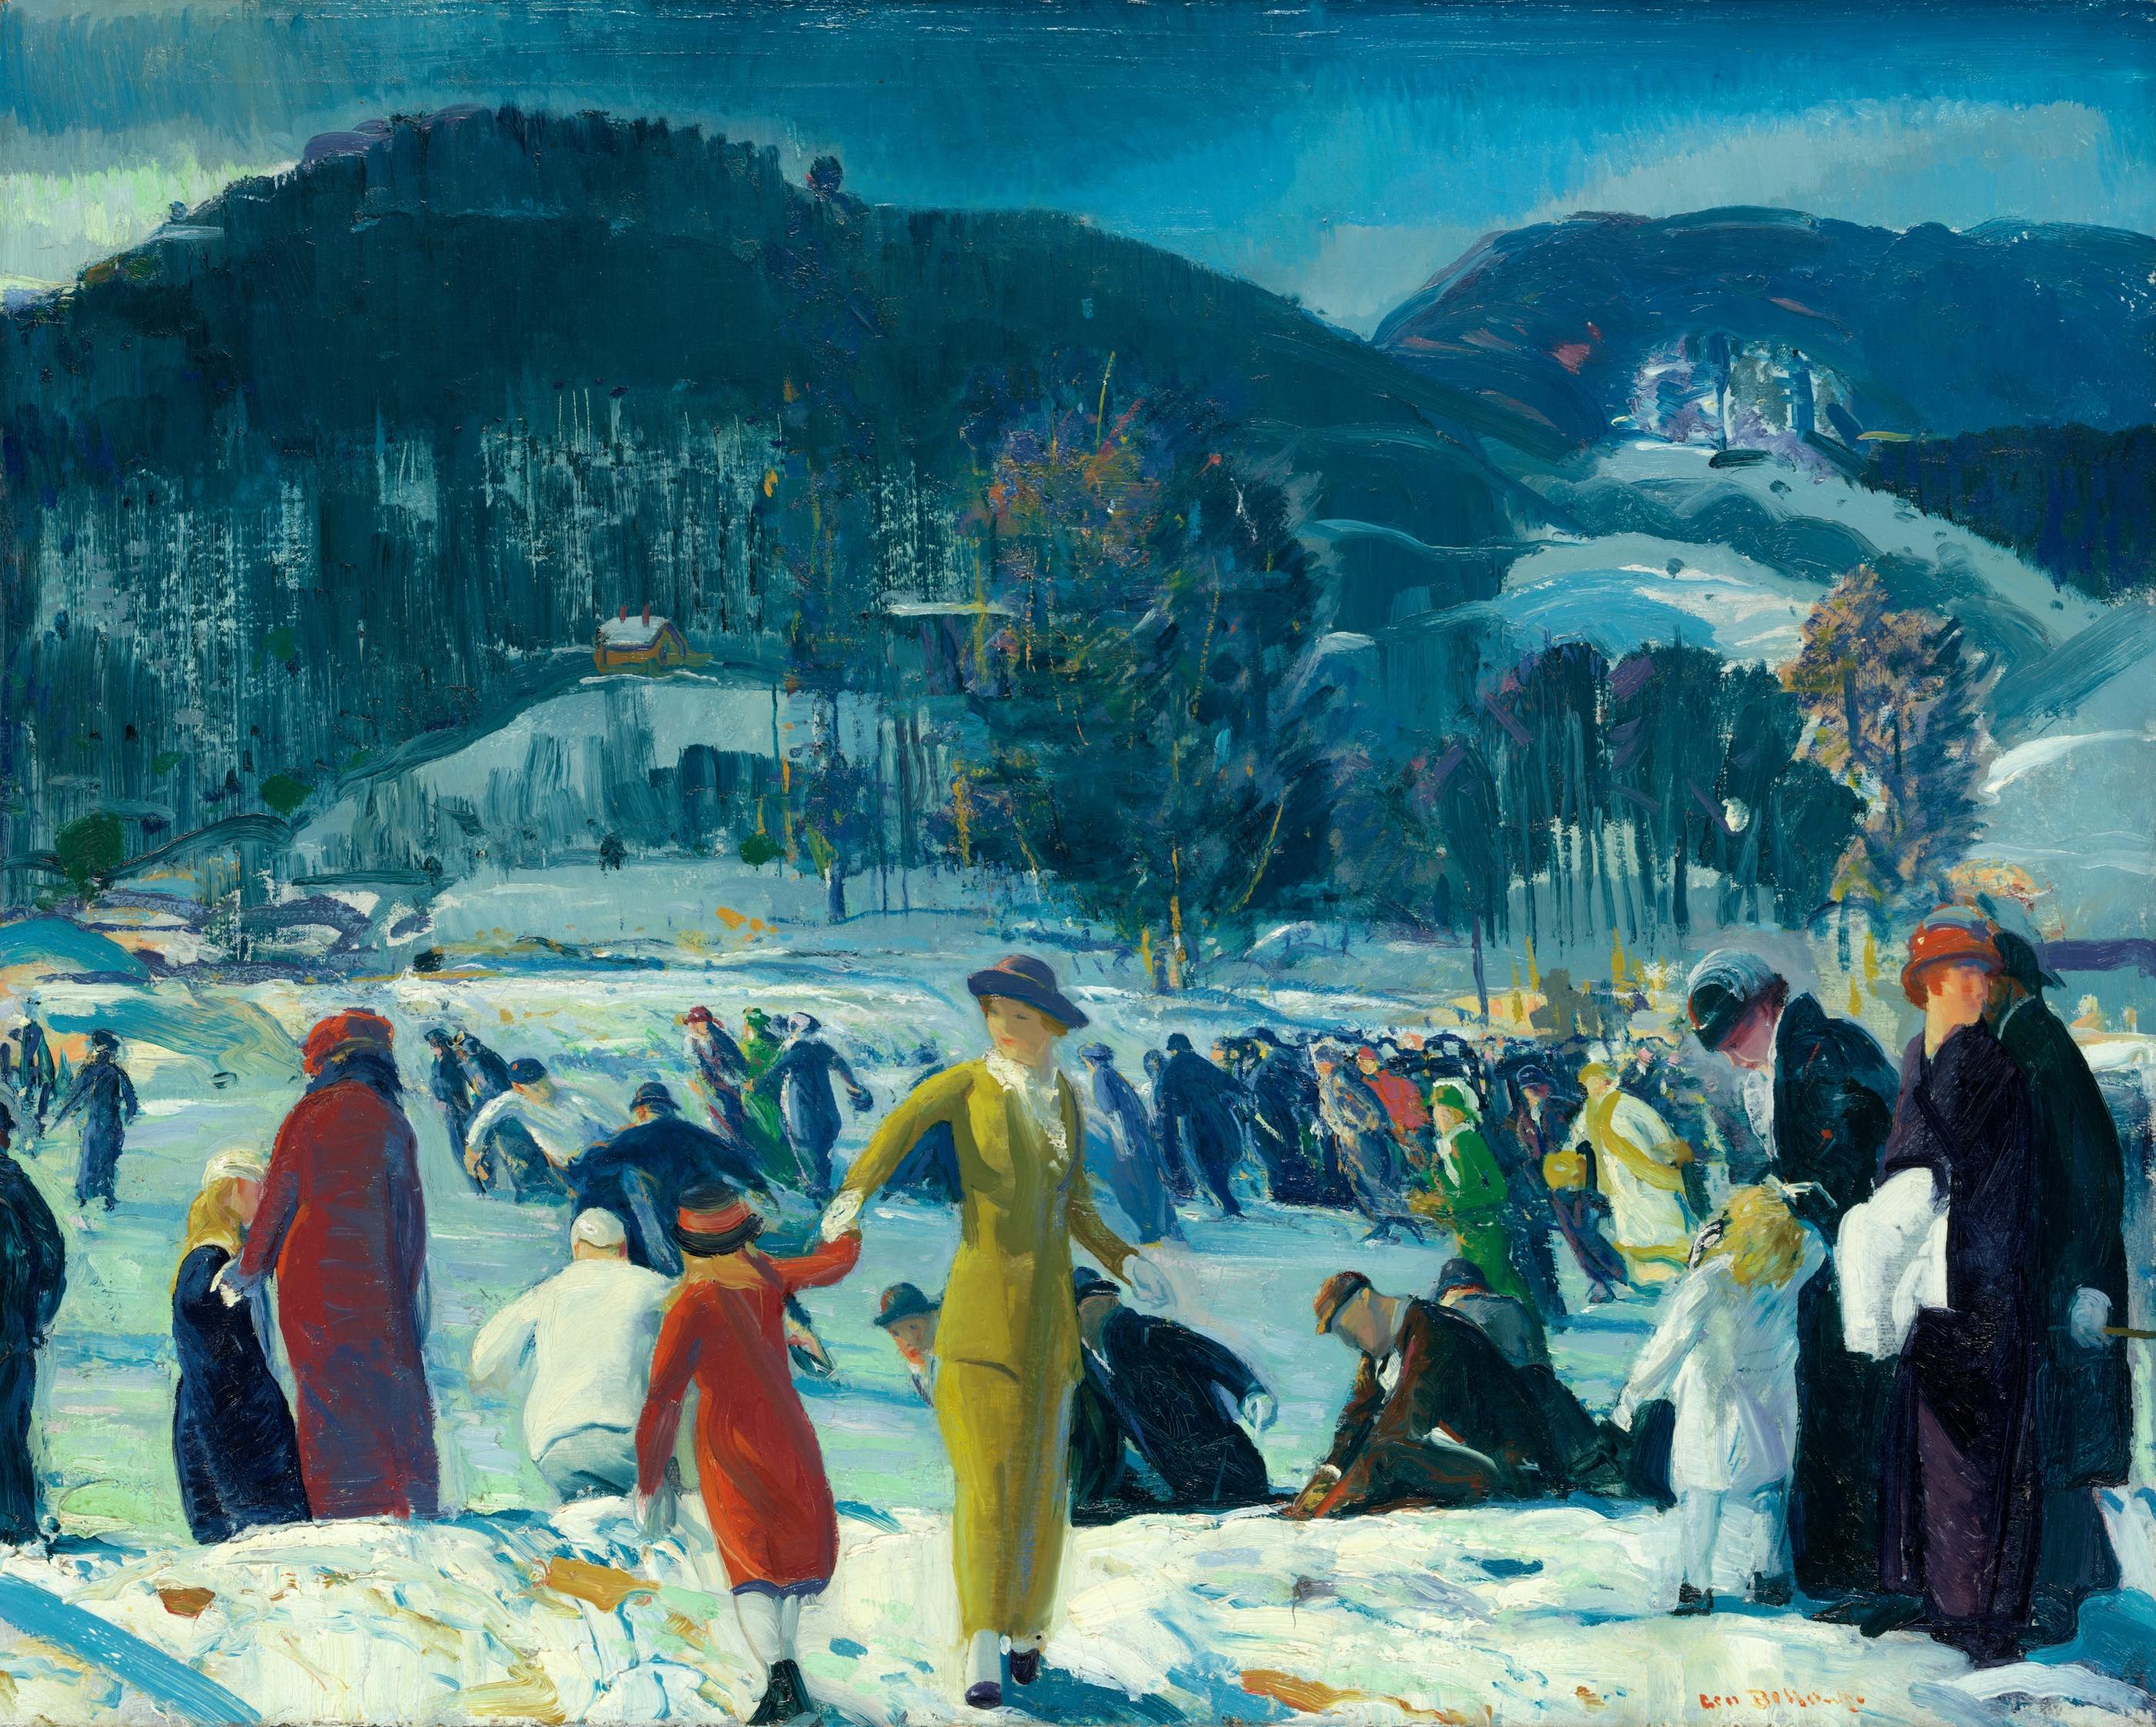 De dragul iernii by George Bellows - 1914 - 81.6 × 101.6 cm 